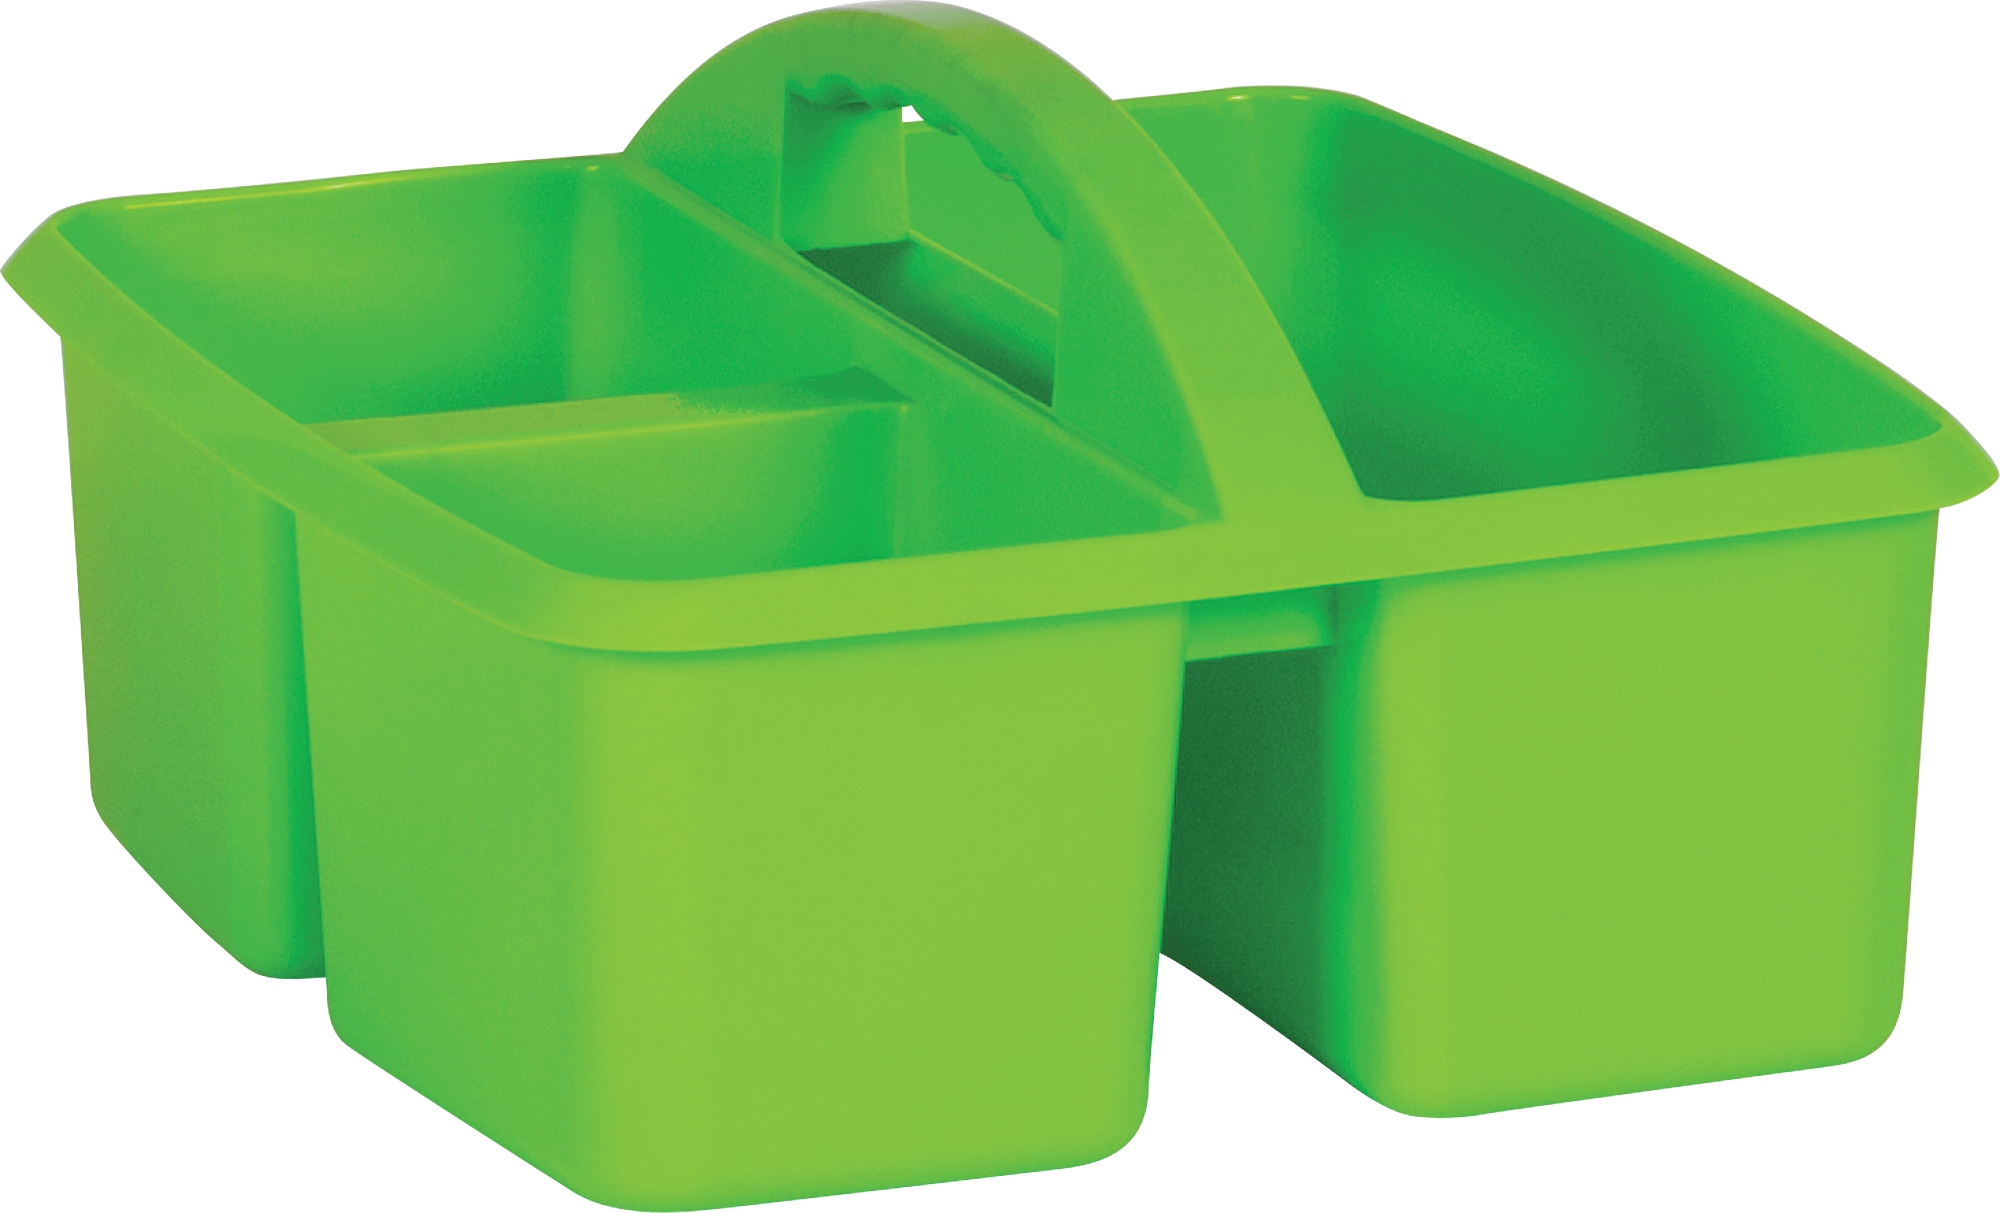 Lime Plastic Storage Caddy